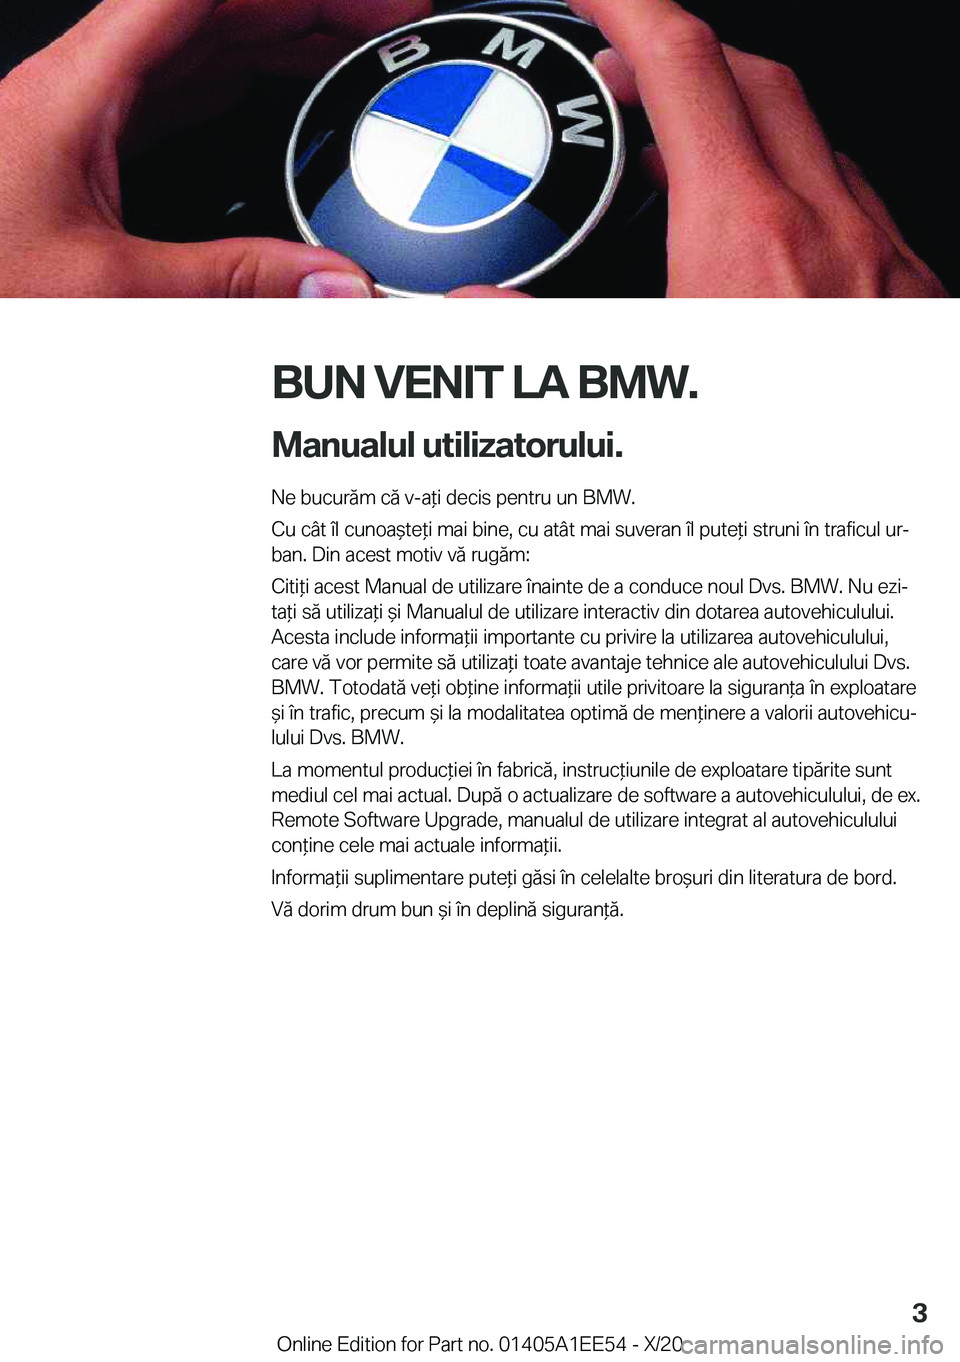 BMW 8 SERIES CONVERTIBLE 2021  Ghiduri De Utilizare (in Romanian) �B�U�N��V�E�N�I�T��L�A��B�M�W�.�M�a�n�u�a�l�u�l��u�t�i�l�i�z�a�t�o�r�u�l�u�i�.
�N�e��b�u�c�u�r�ă�m��c�ă��v�-�a*�i��d�e�c�i�s��p�e�n�t�r�u��u�n��B�M�W�.
�C�u��c�